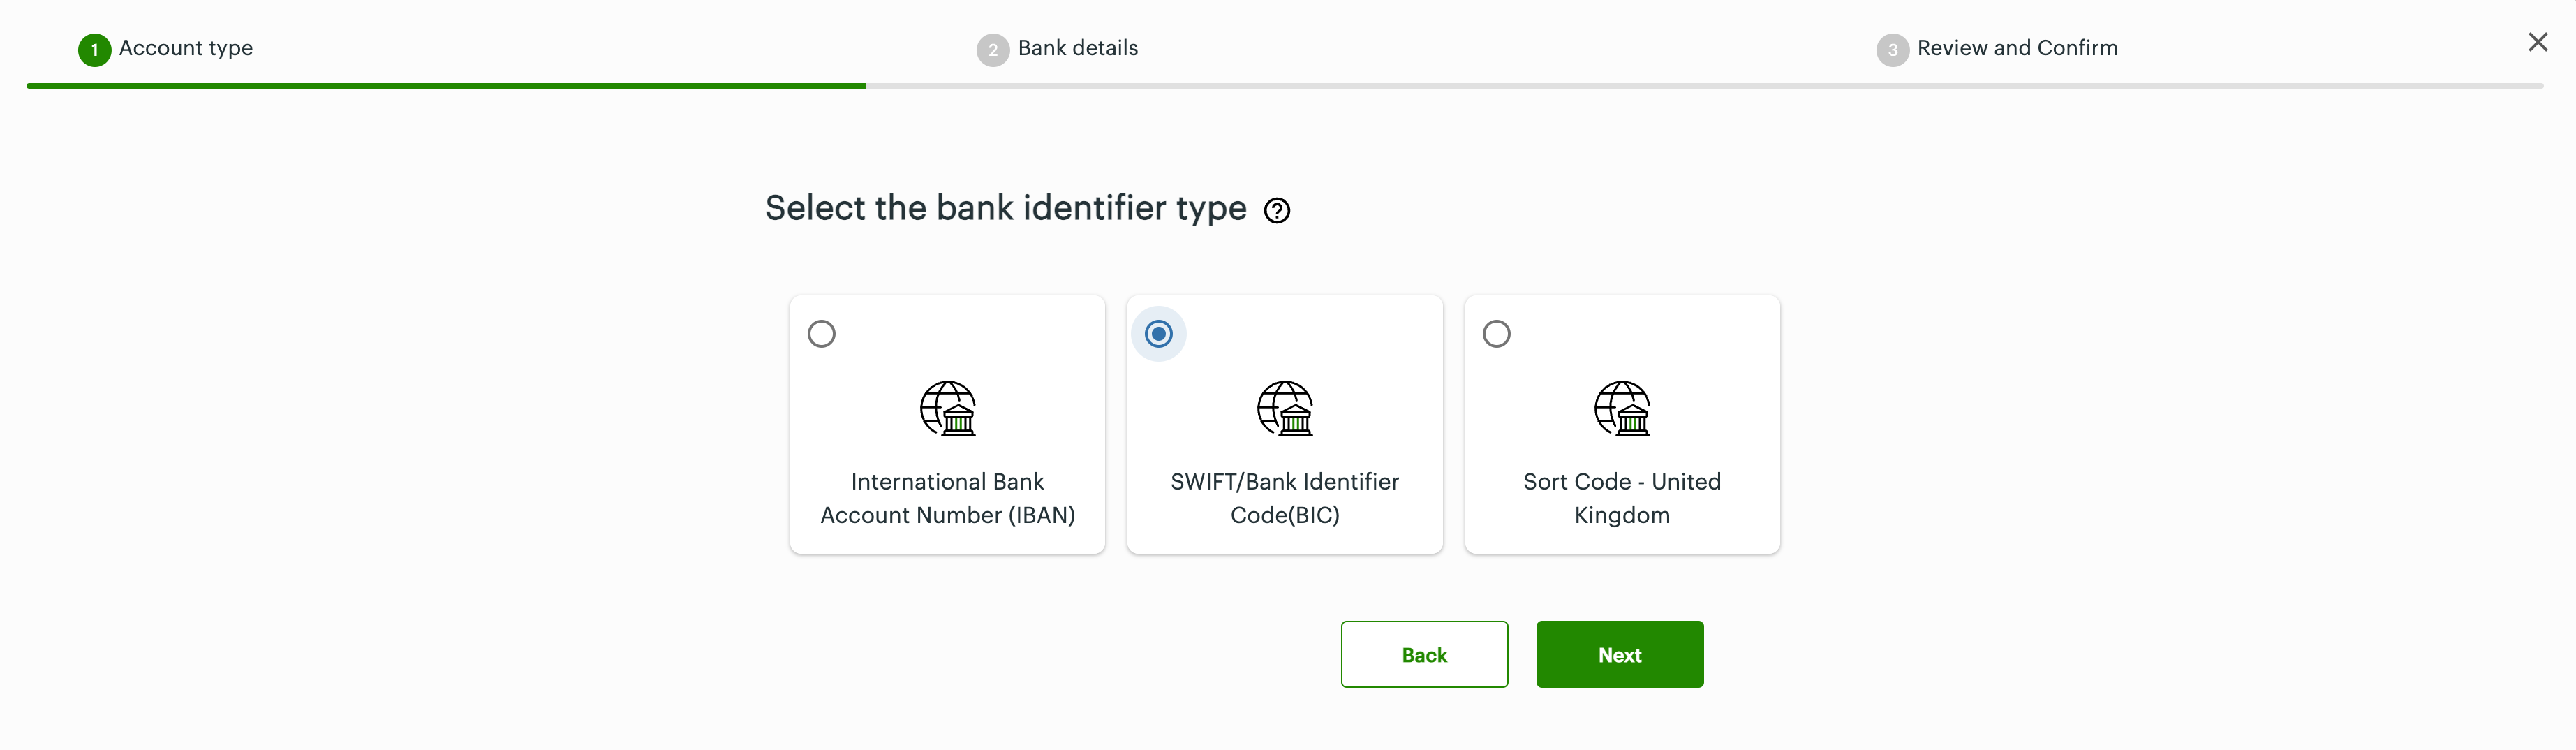 Select the bank identifier type: SWIFT/BIC